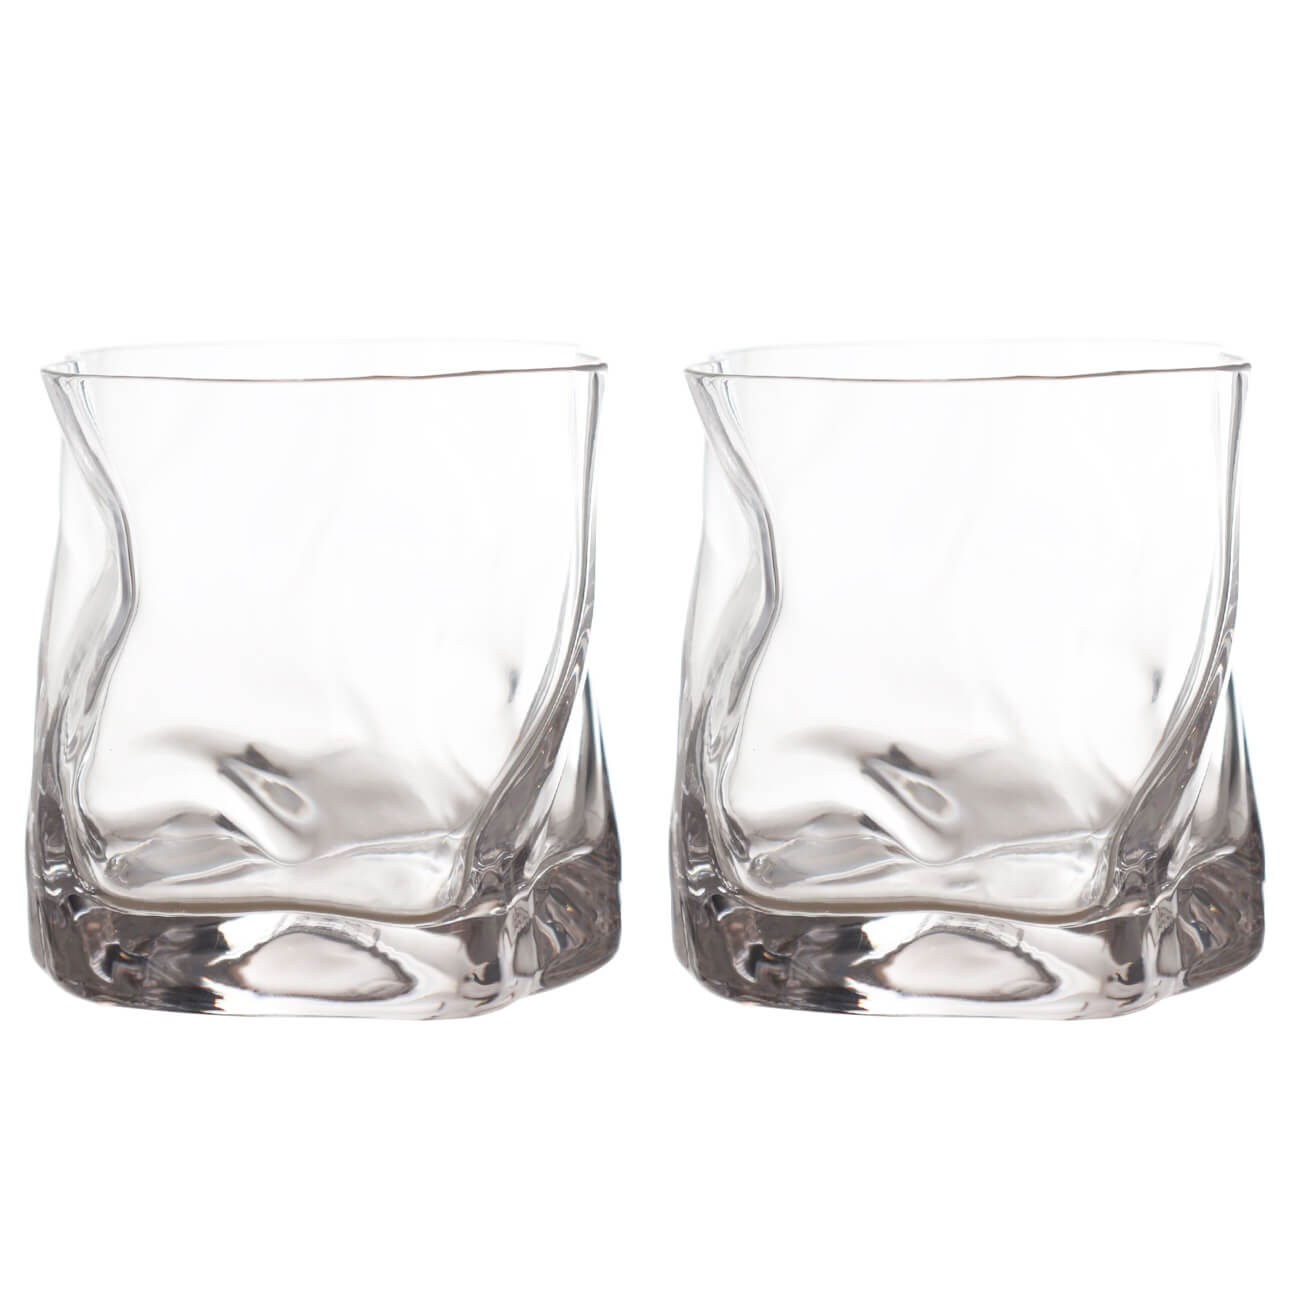 стакан для виски crystalex идеал набор 6 шт стекло 00895 Стакан для виски, 245 мл, 2 шт, стекло, Slalom